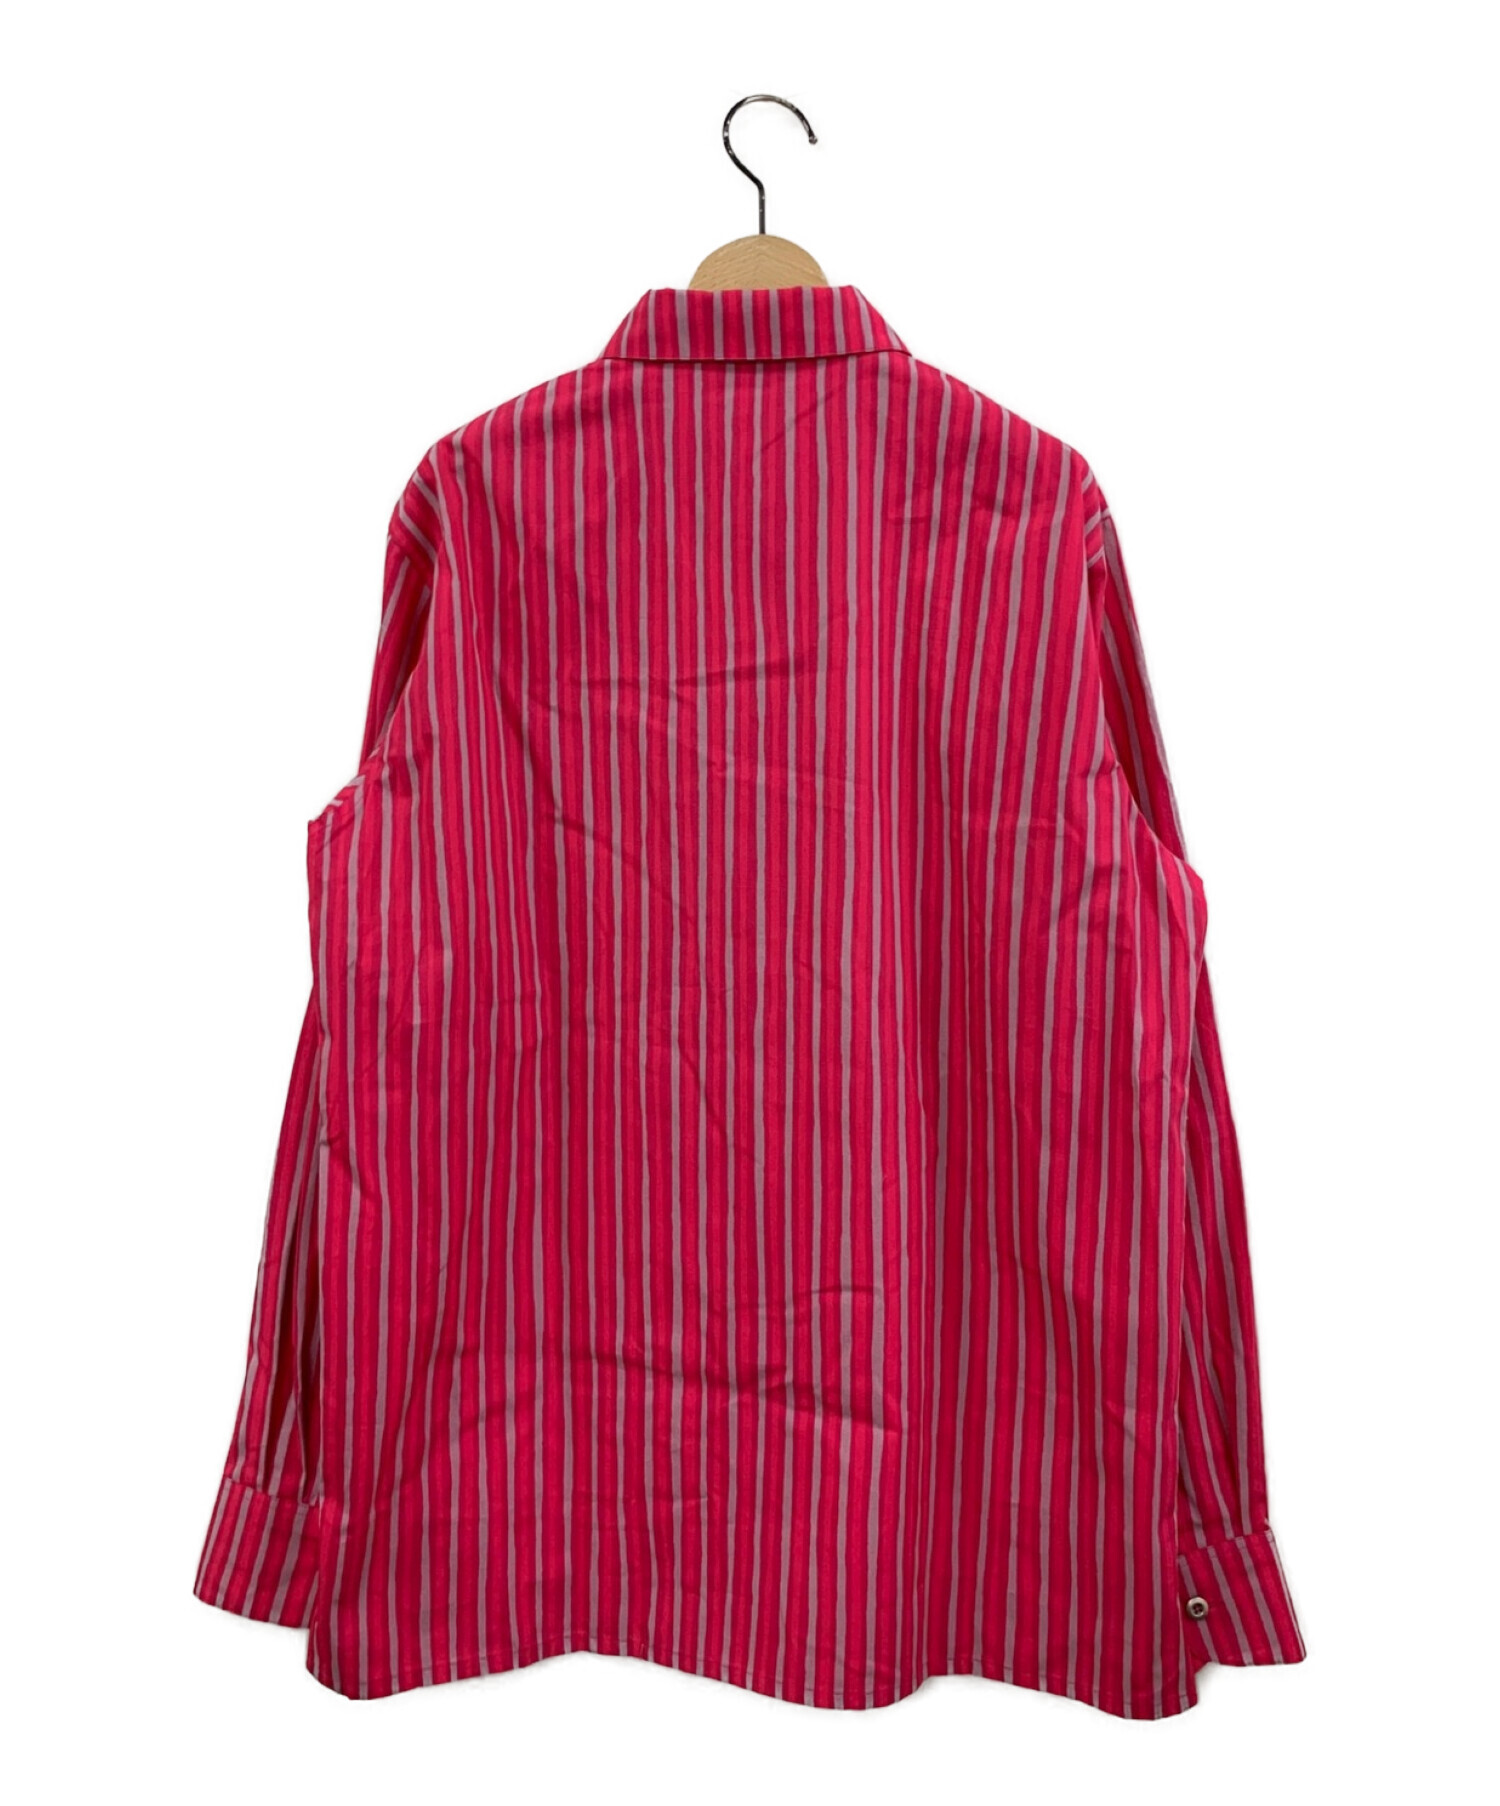 marimekko kioski (マリメッコキオスキ) Jokapoika cotton shirt ピンク サイズ:XS